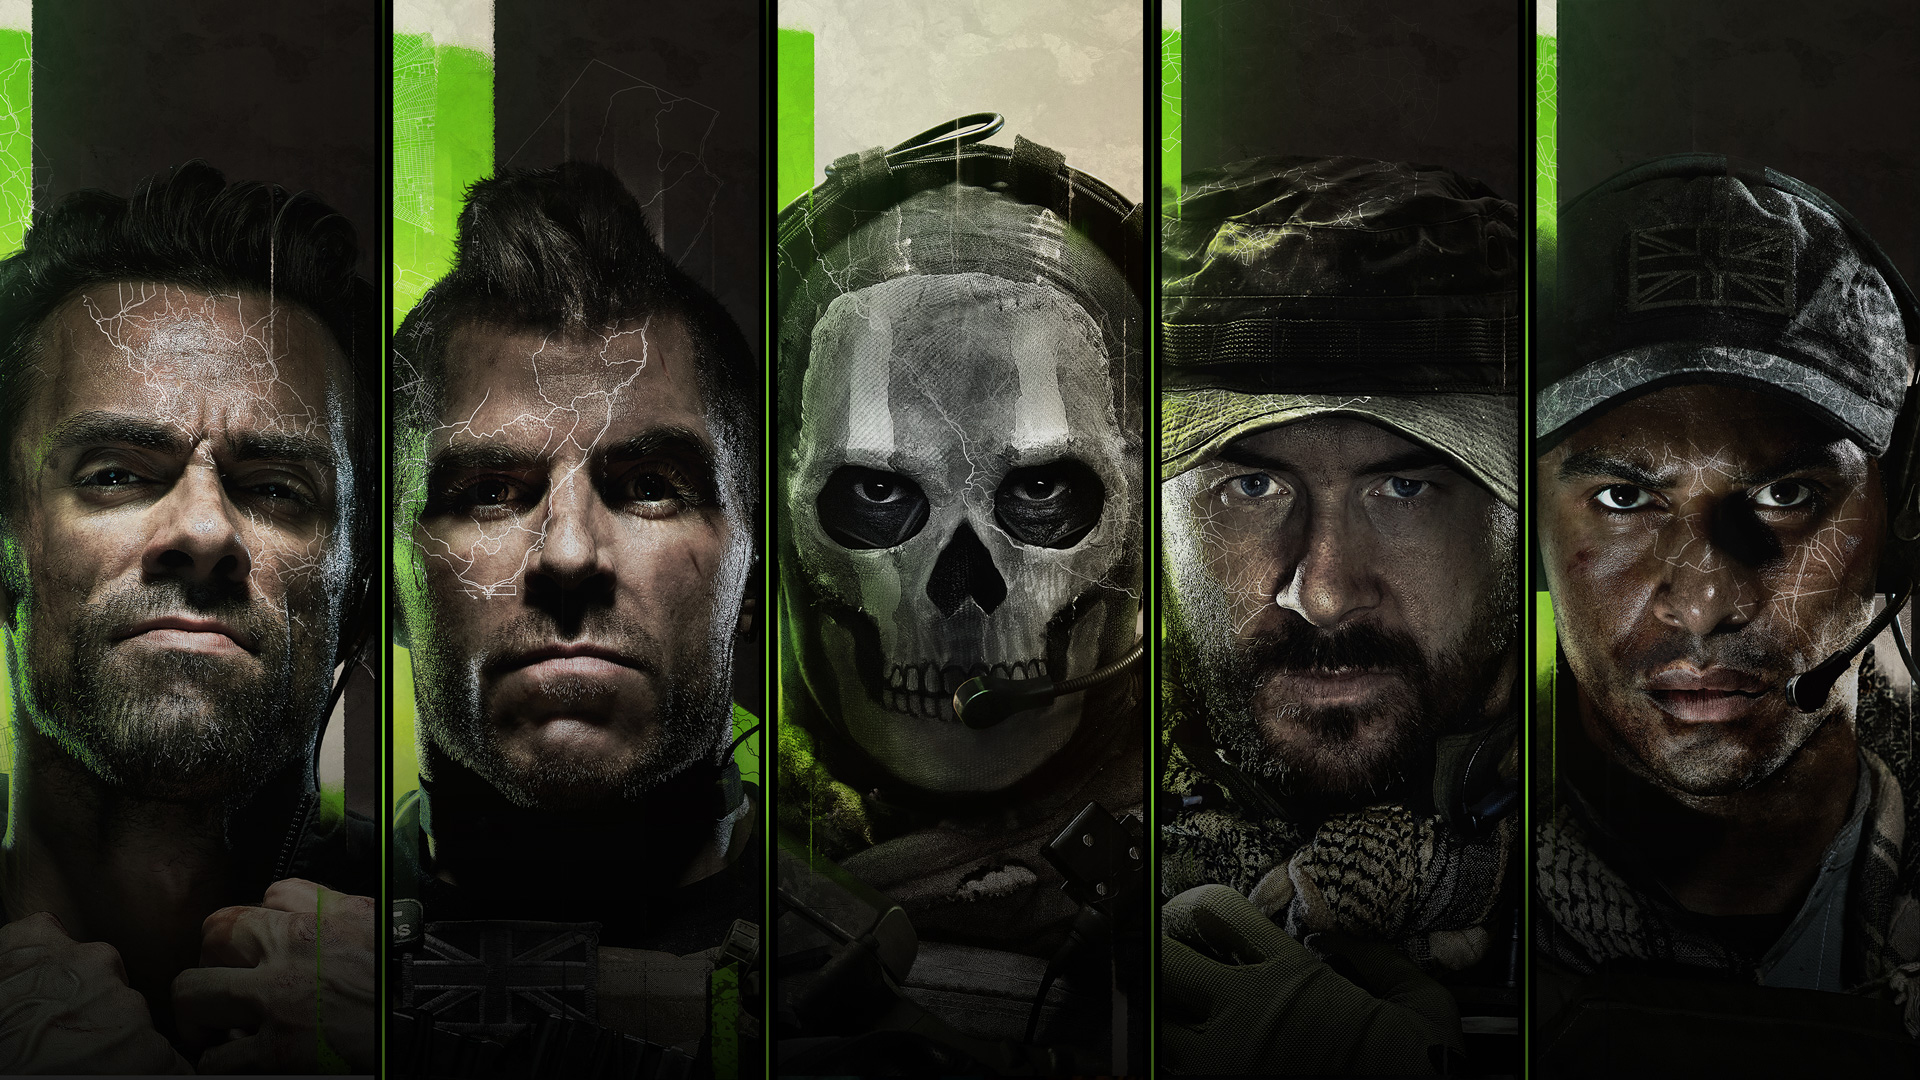 Call of Duty®: Modern Warfare® II Editions, Benefits Detailed